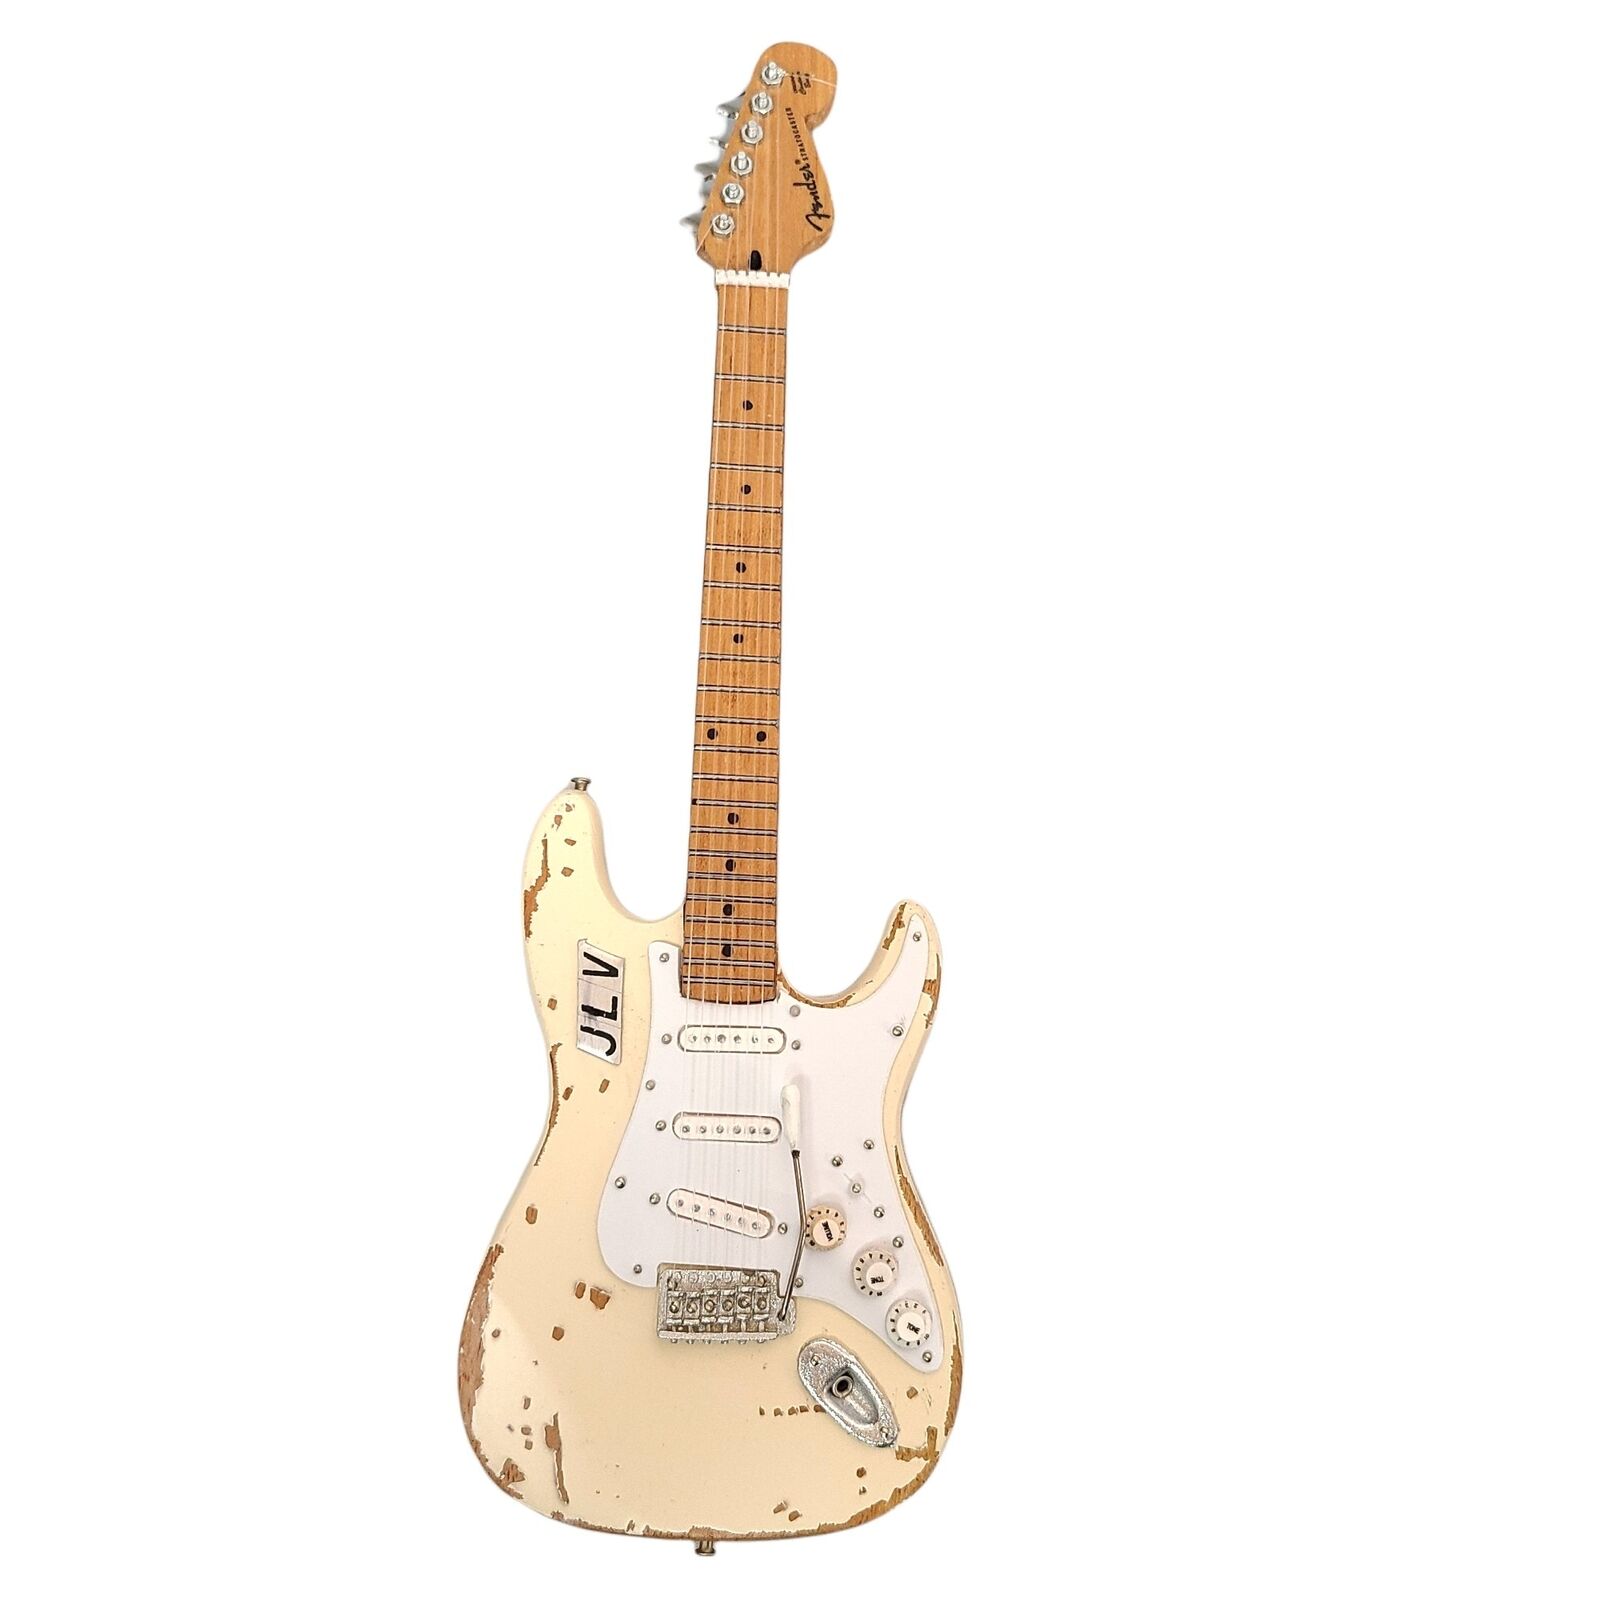 Axe Heaven Mini Guitar Jimmie Vaughan Fender Strat Classic Miniature Replica